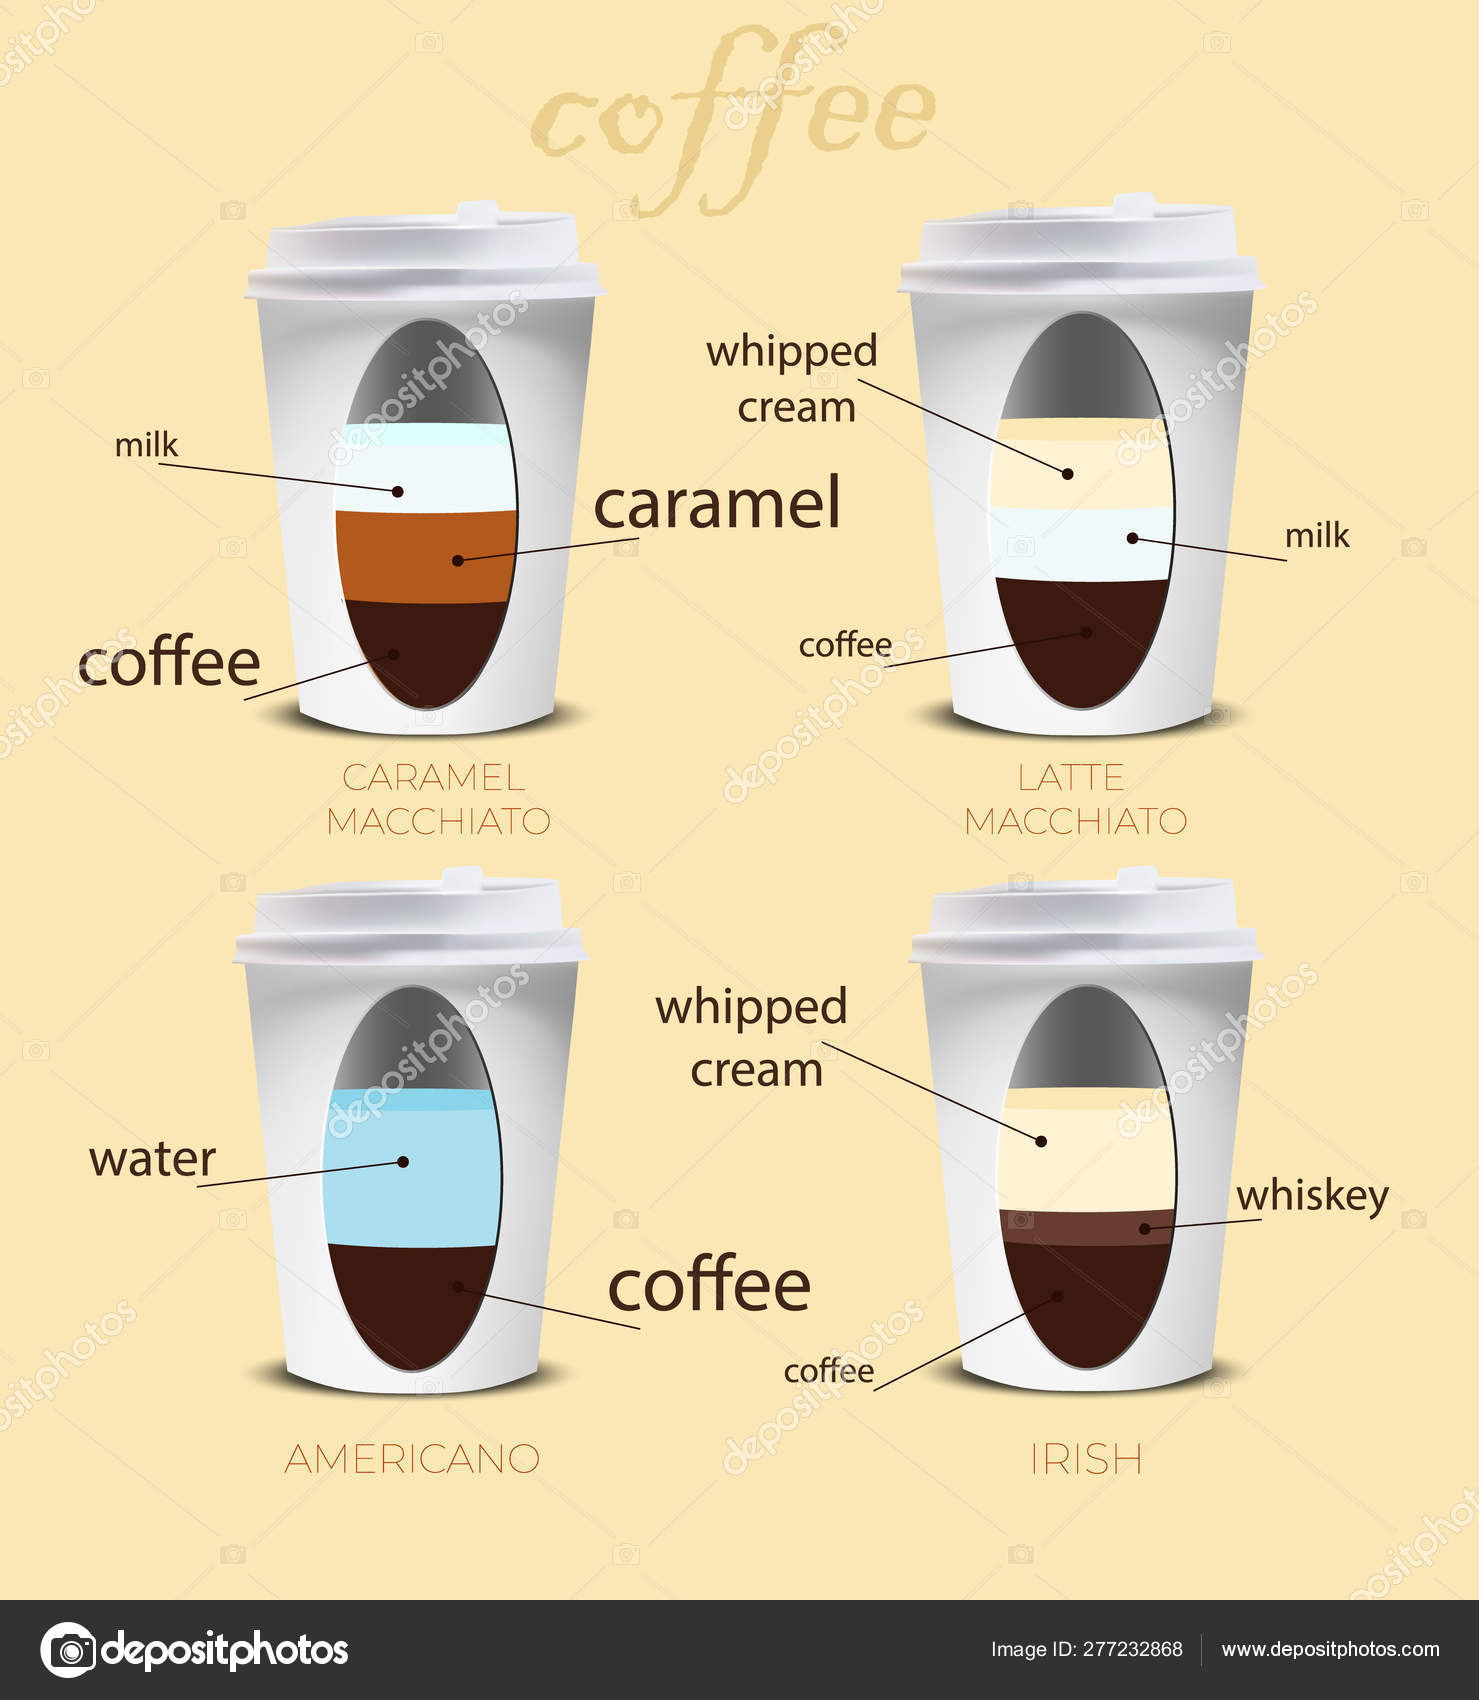 https://st4.depositphotos.com/6196098/27723/v/1600/depositphotos_277232868-stock-illustration-coffee-menu-ingredients-and-proportions.jpg